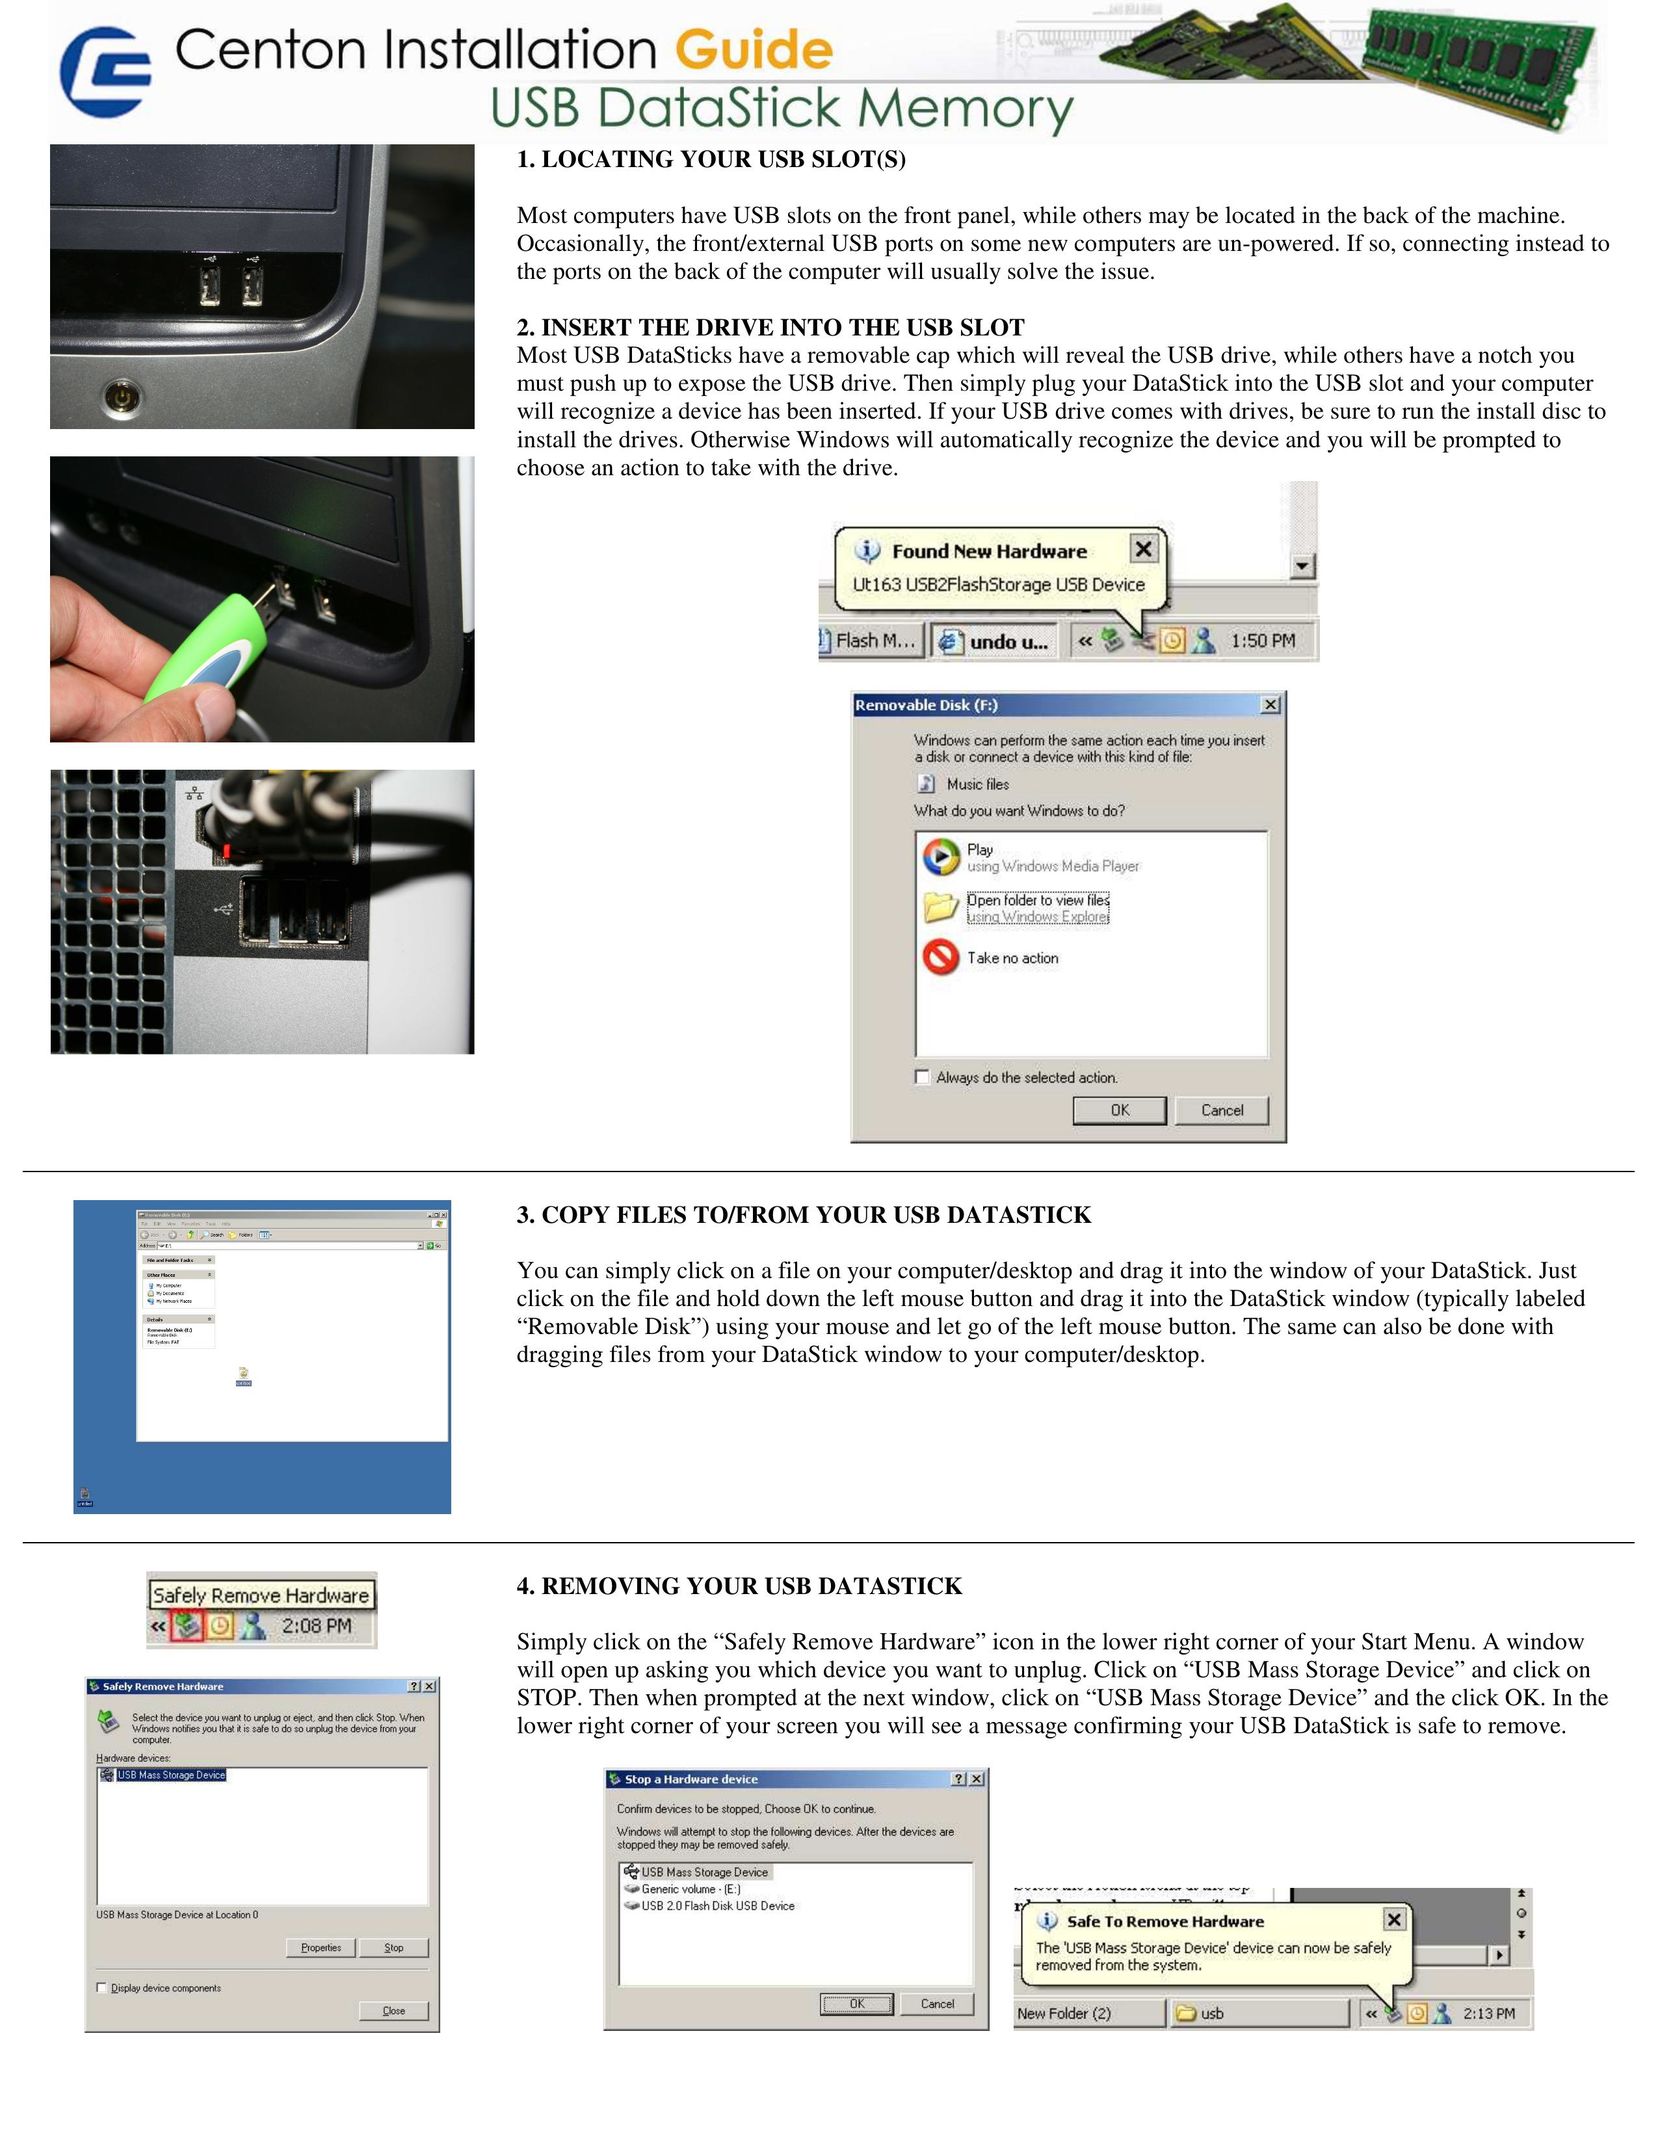 Centon electronic DSD16GB-001 Computer Drive User Manual